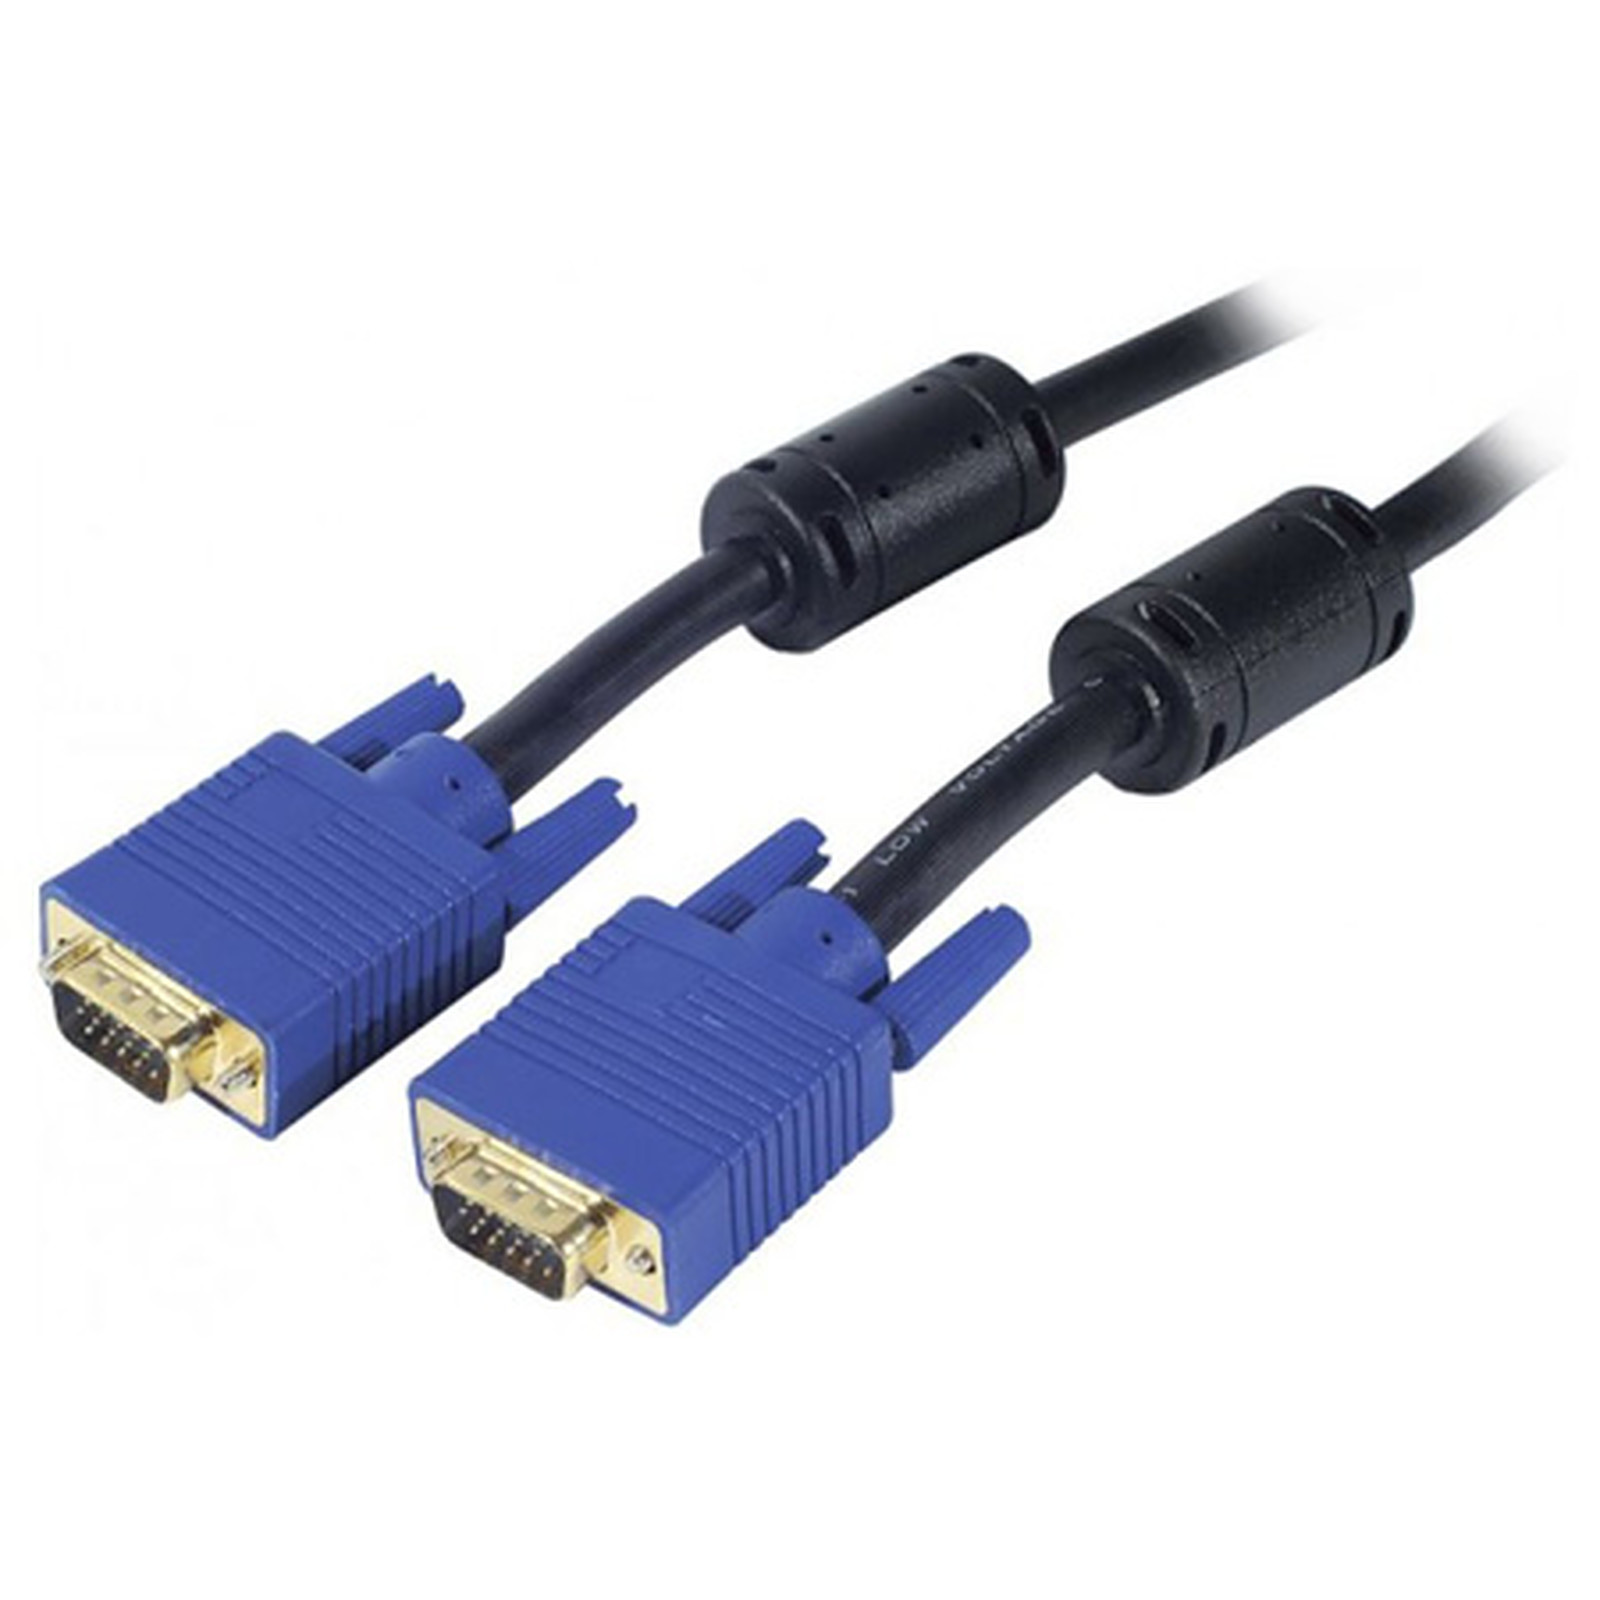 Cable VGA male / male compatible DCC2B (1.8 mètre) - VGA Generique